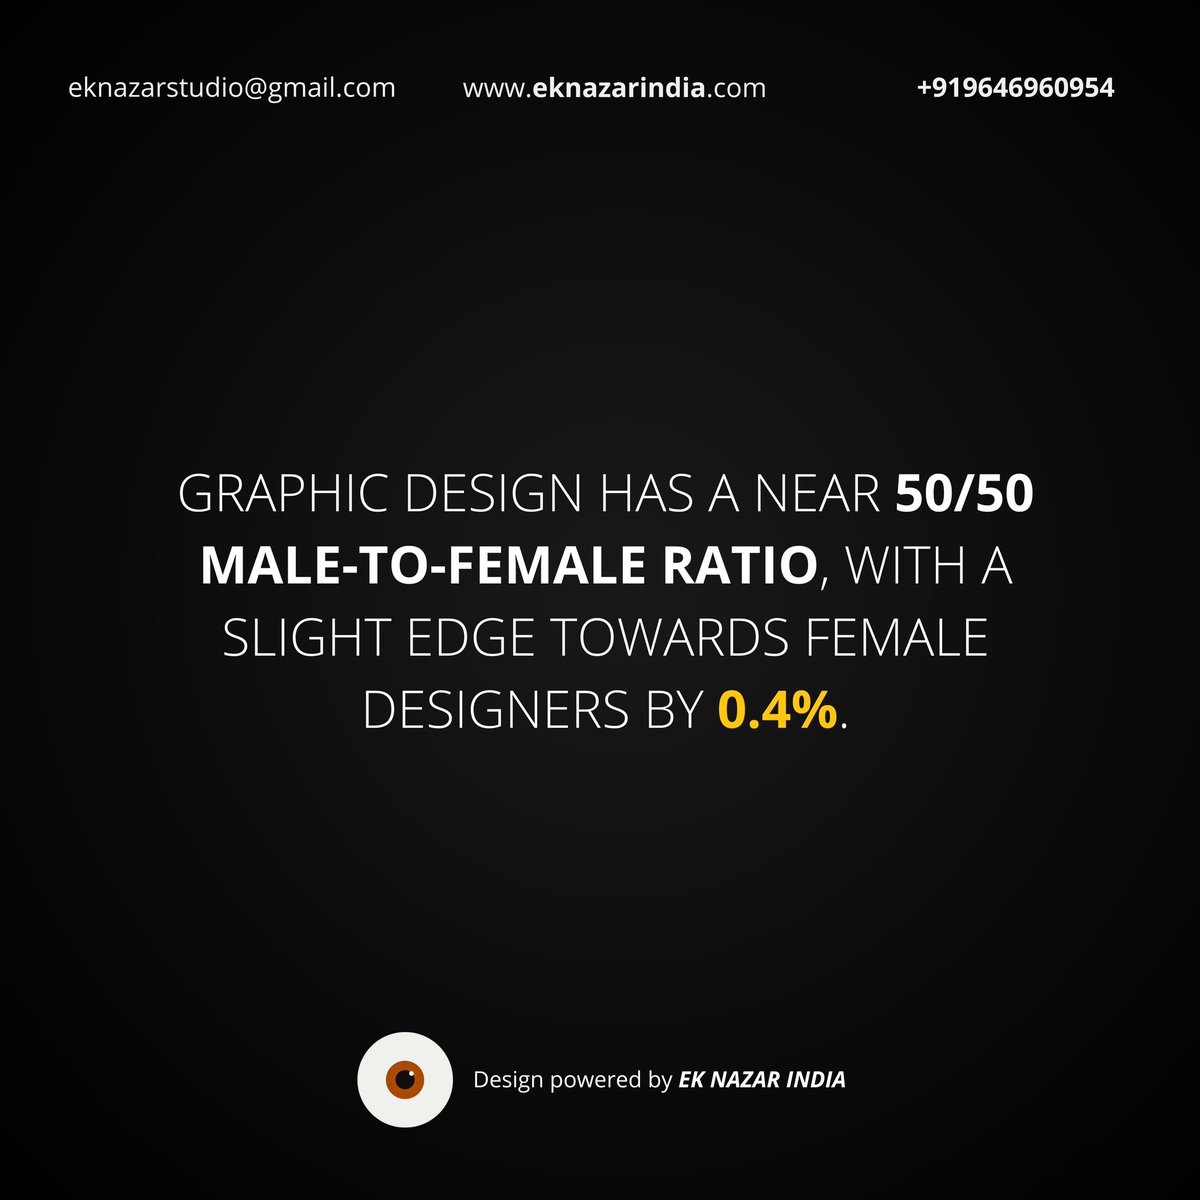 Women are leading the way in graphic design. 👩🏻‍💻
#GraphicDesign #WomenEmpowerment #FemaleDesigner